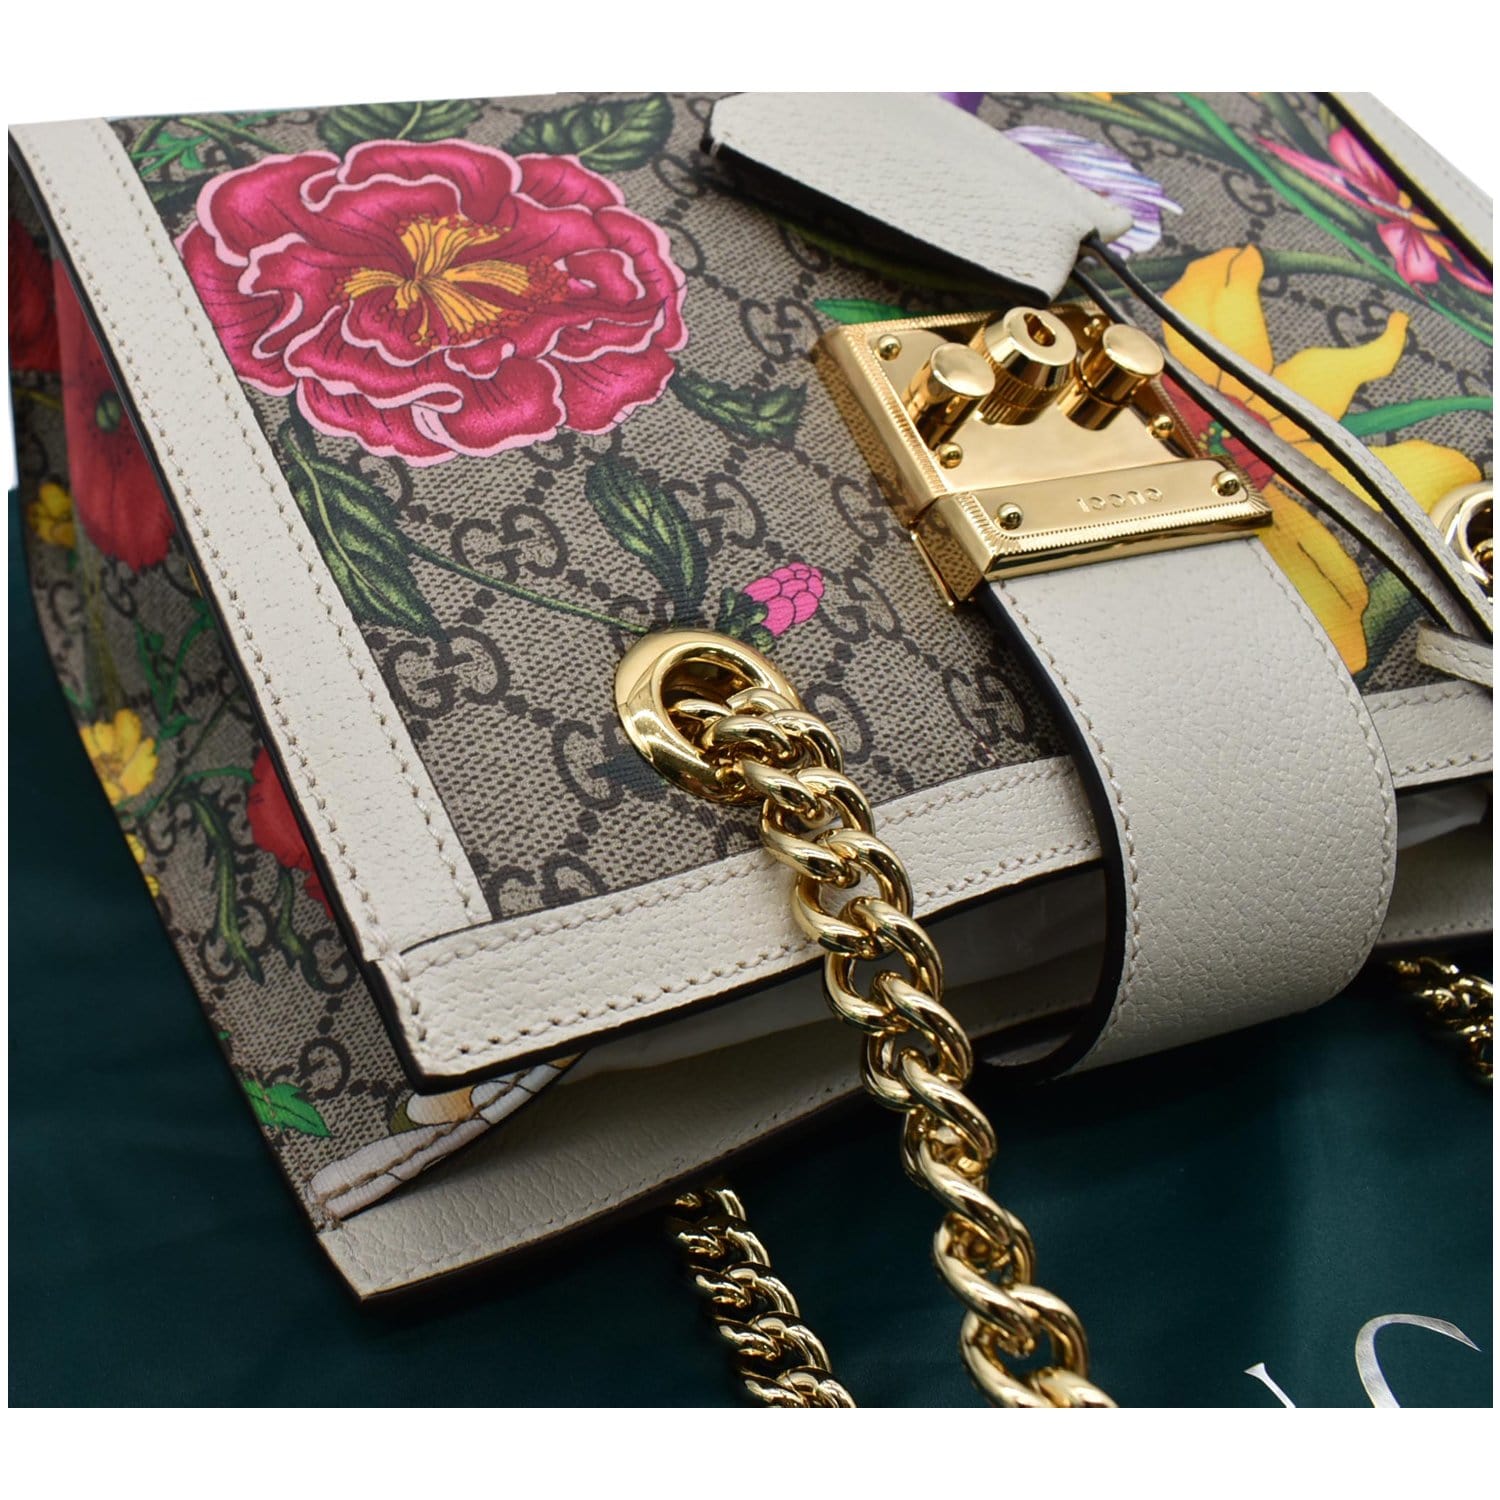 Gucci Beige/Off White GG Supreme Canvas Small Padlock Shoulder Bag